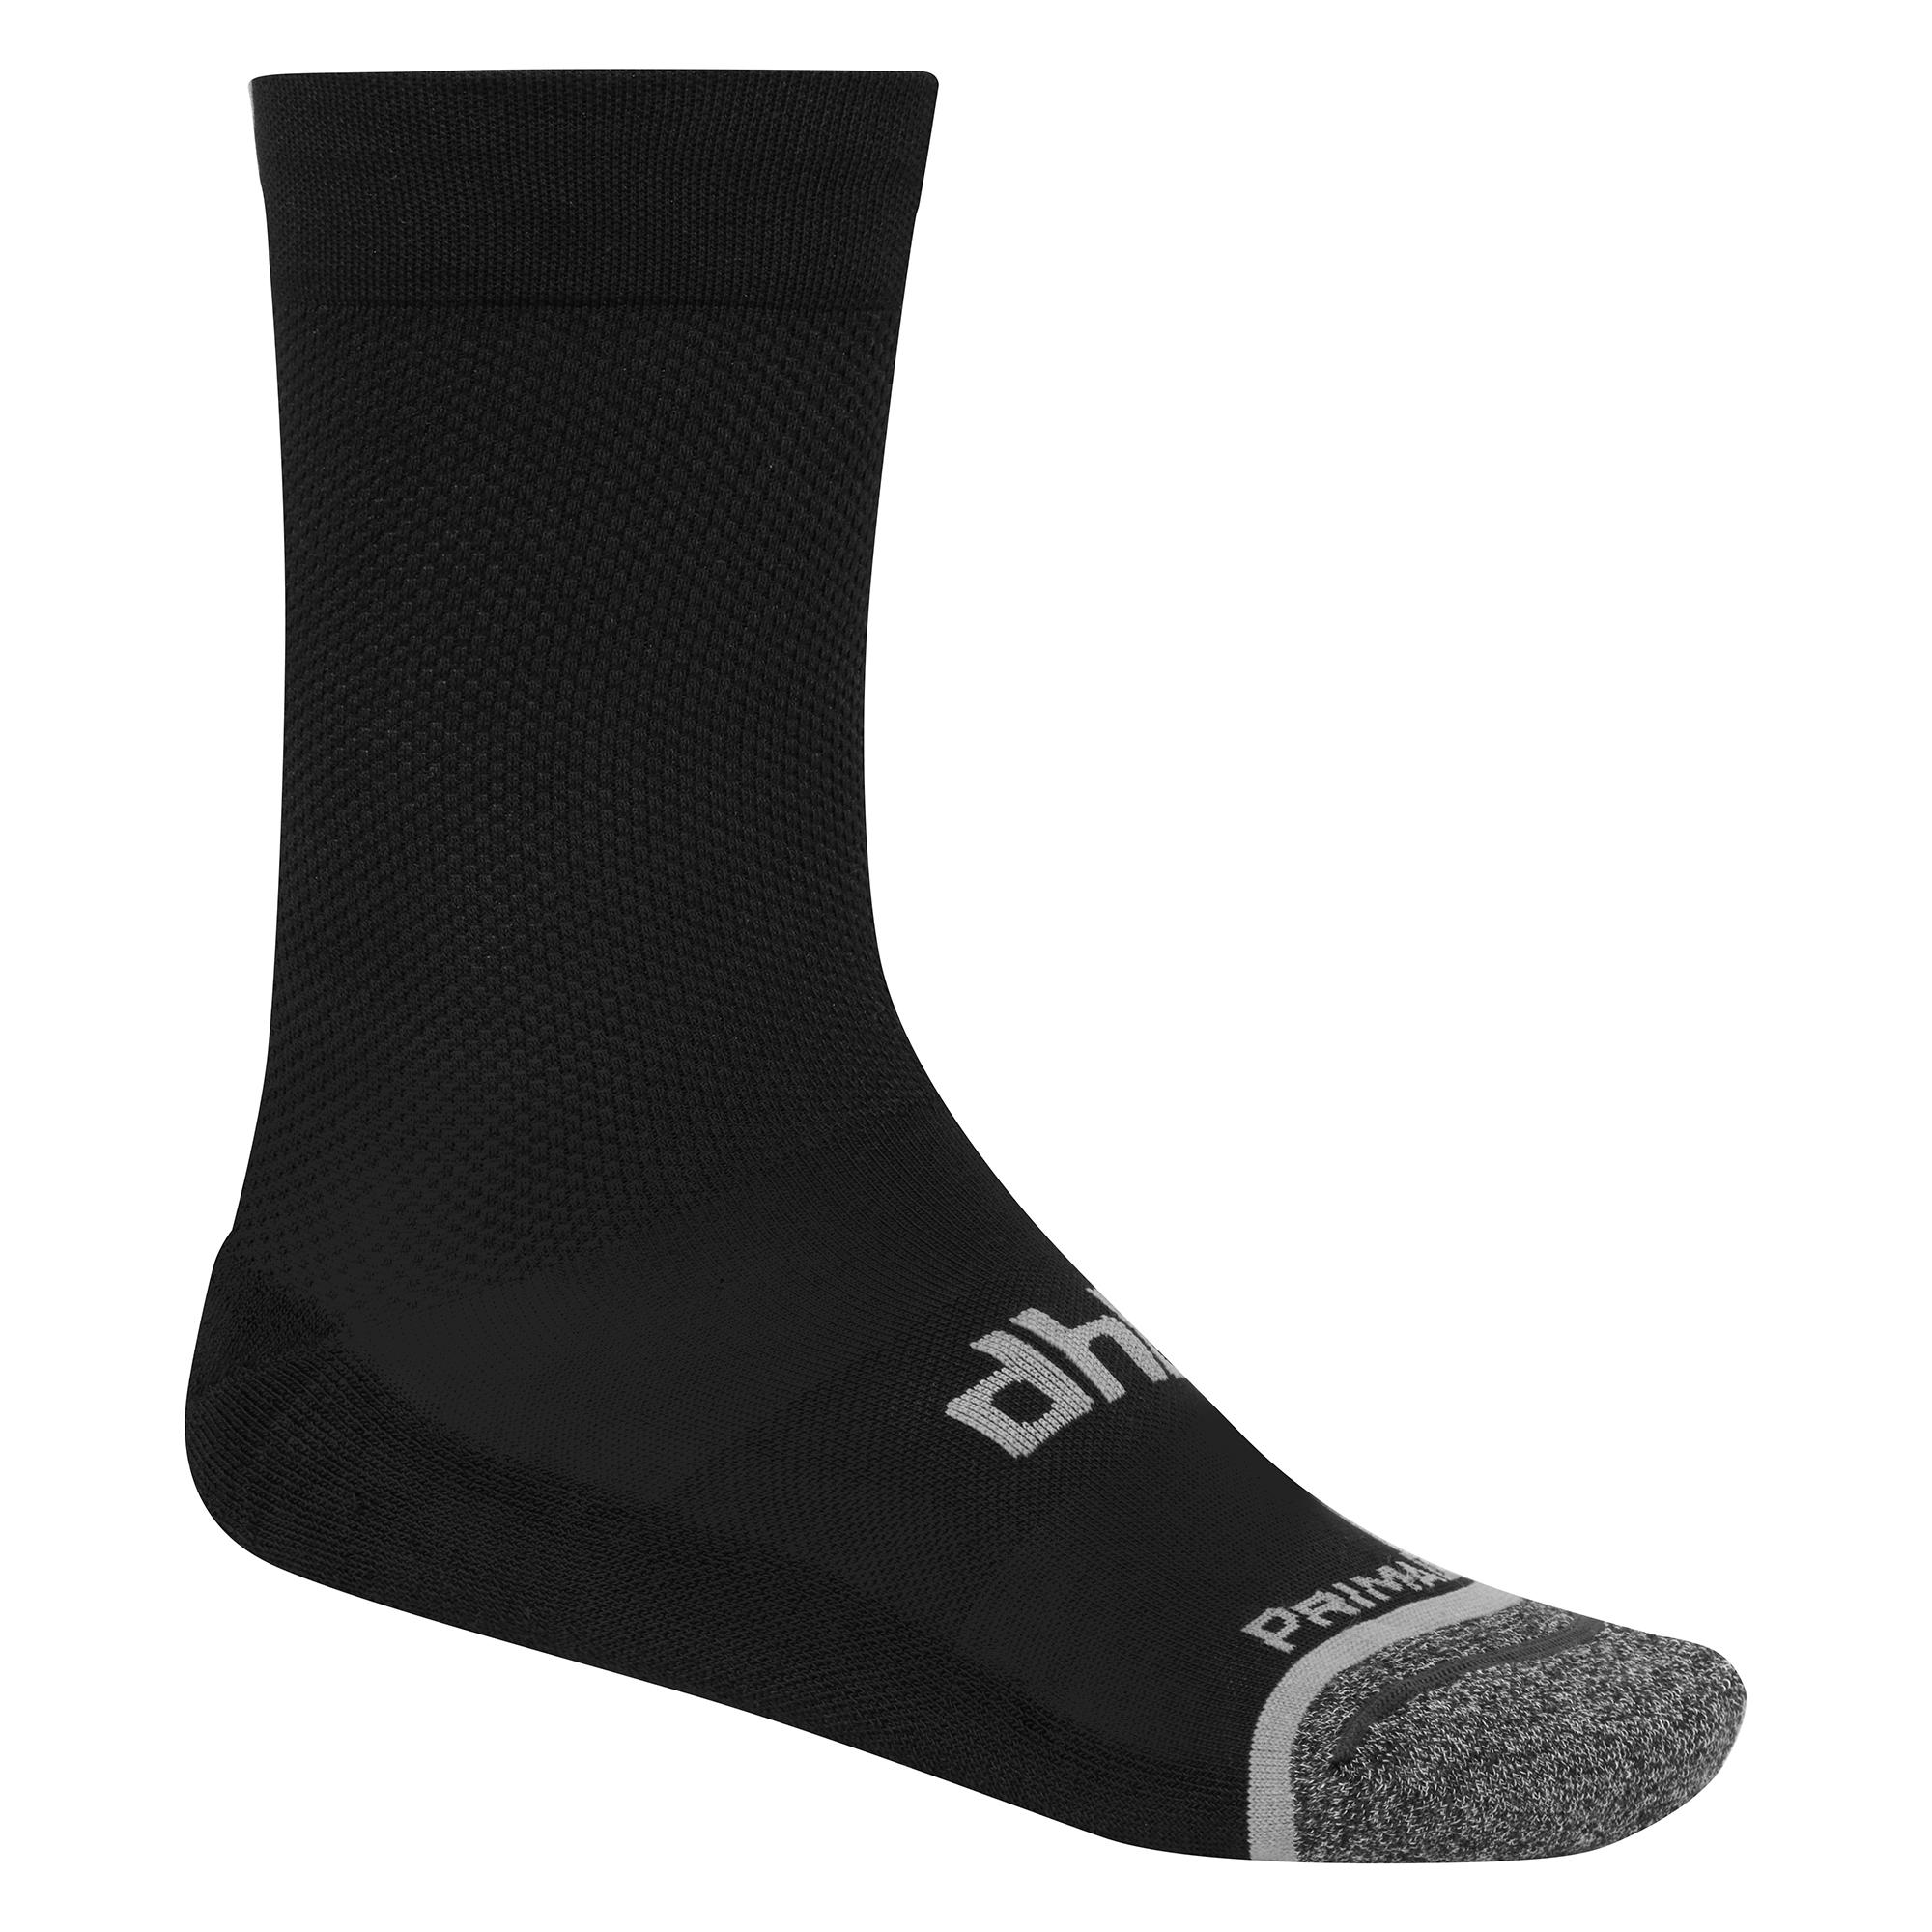 Dhb Aeron Lab Winter Sock - Black/grey